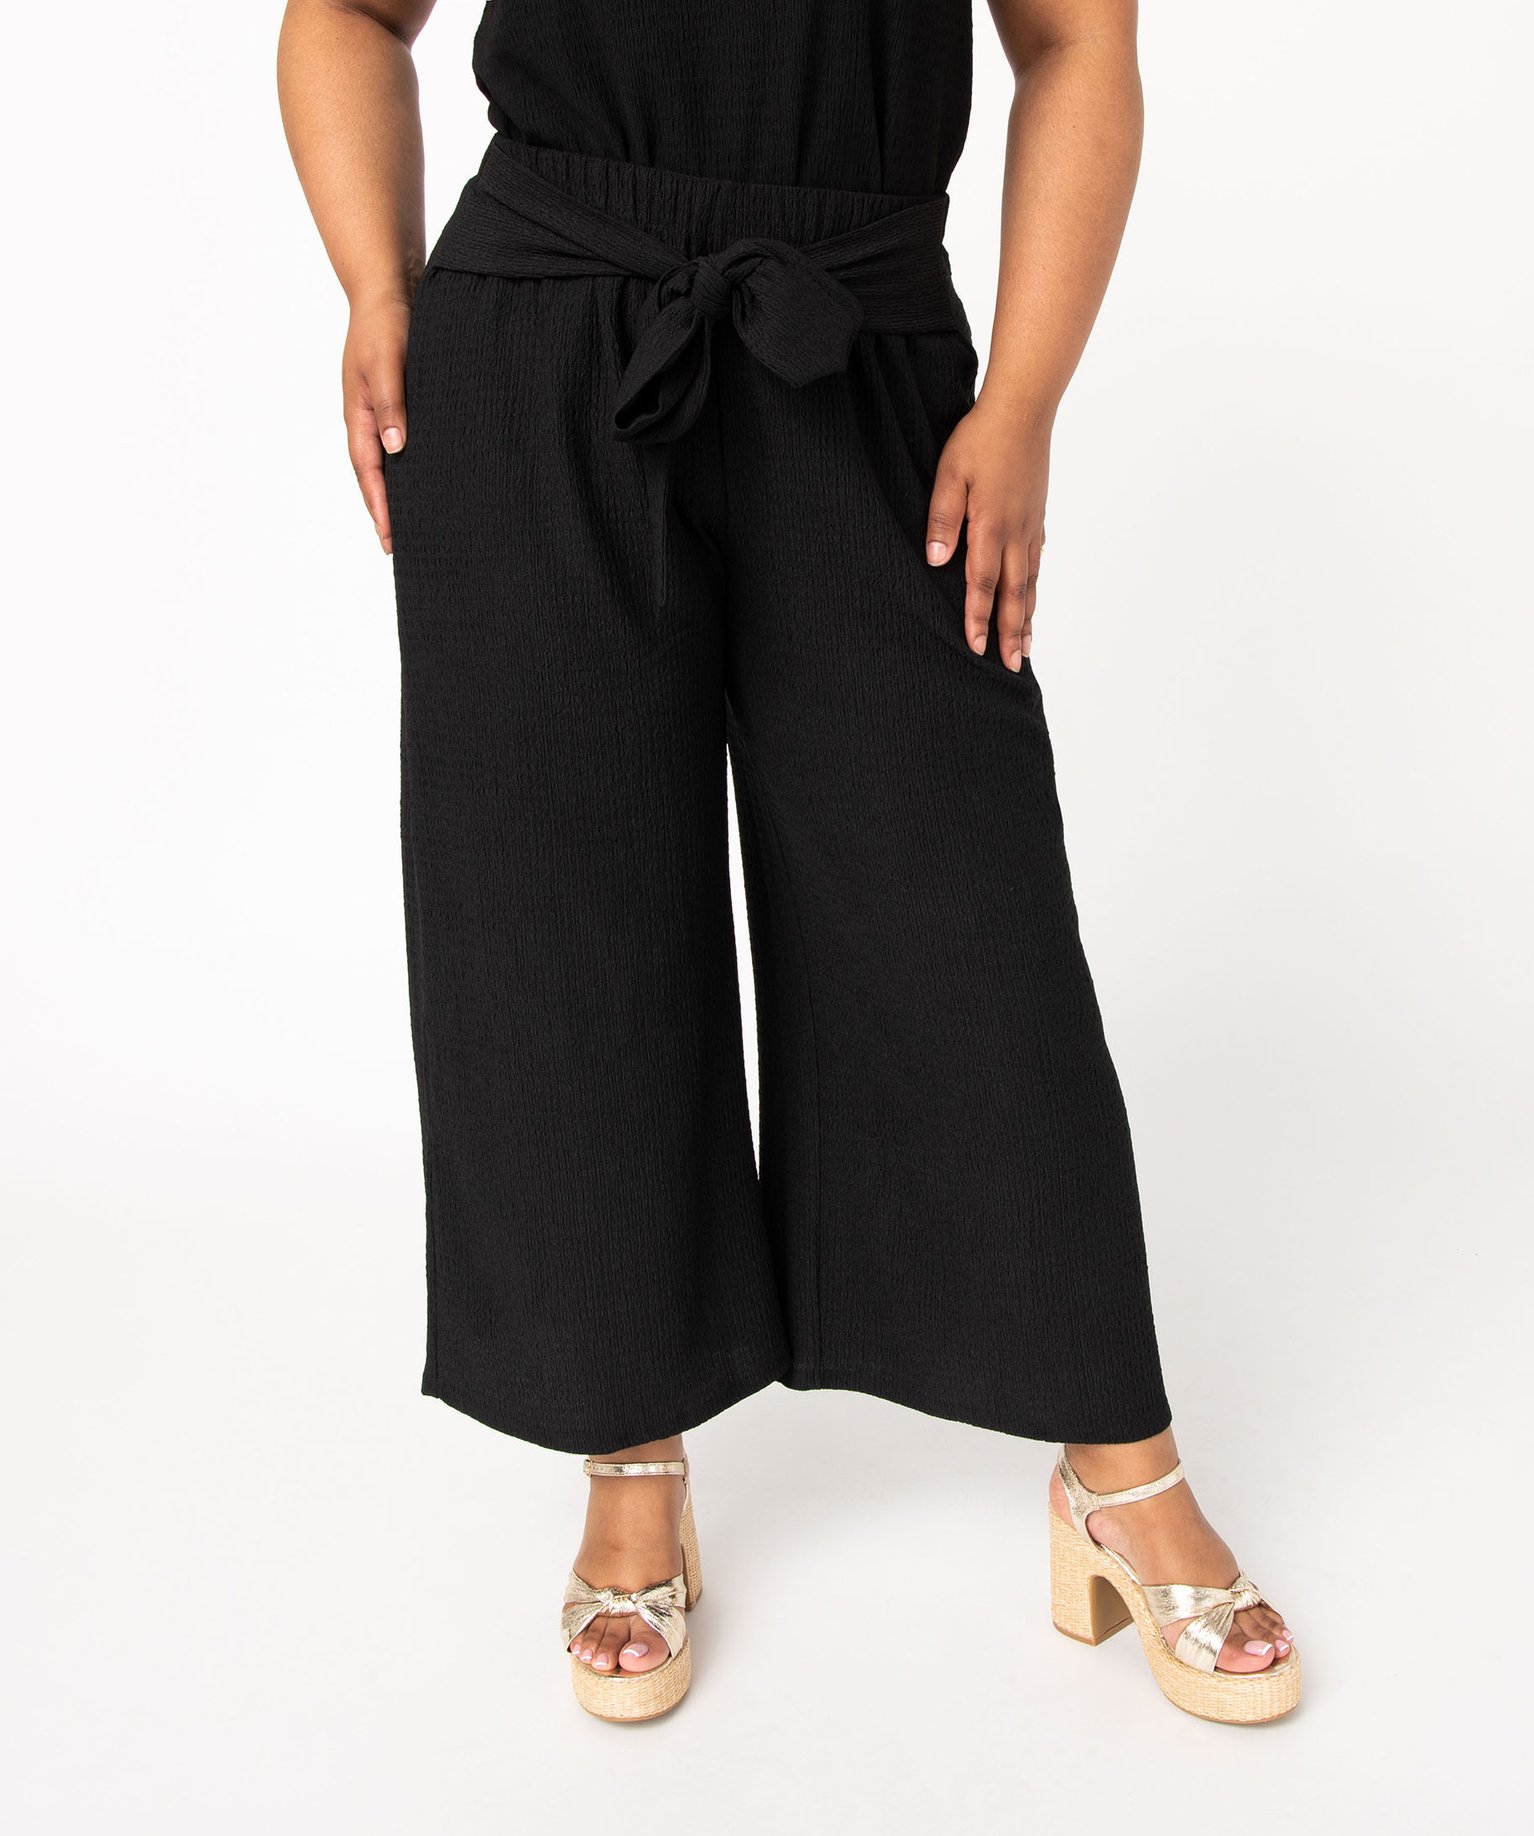 pantalon en toile gaufree femme grande taille noir leggings et jeggings